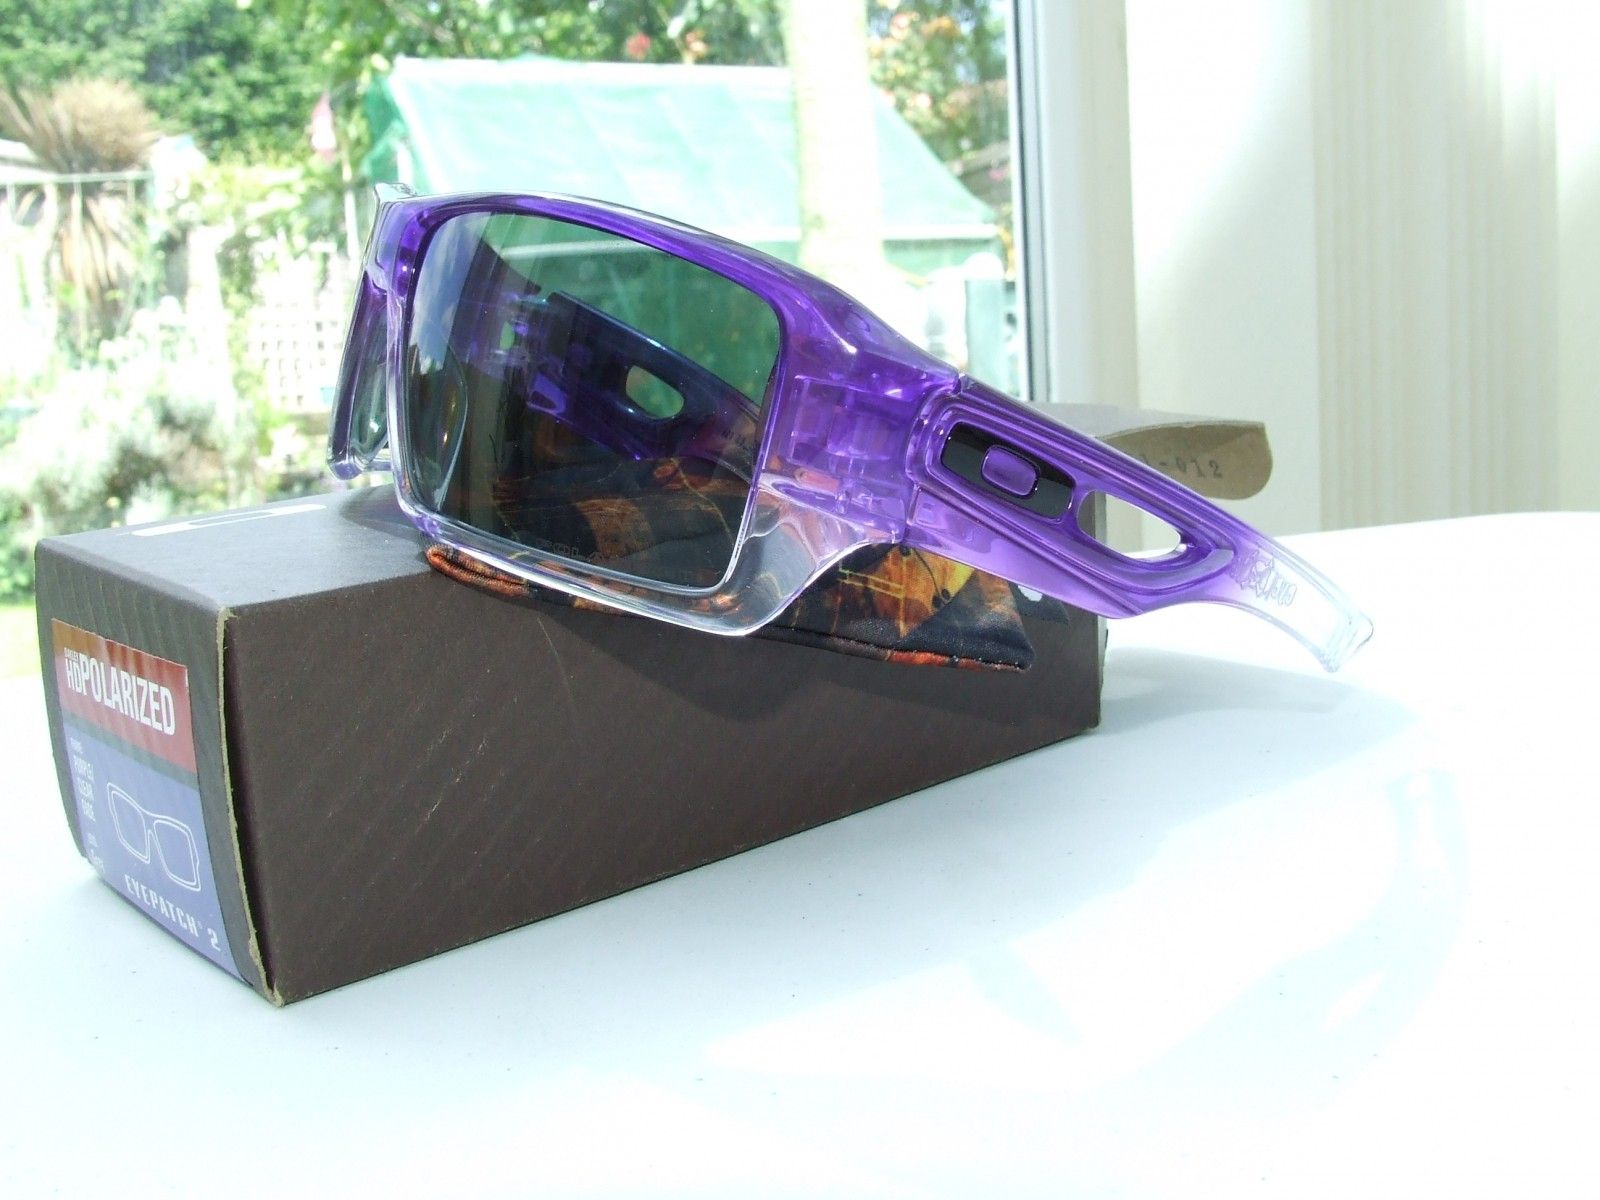 My Purple Clear Fade EyePatch 2.0s side view